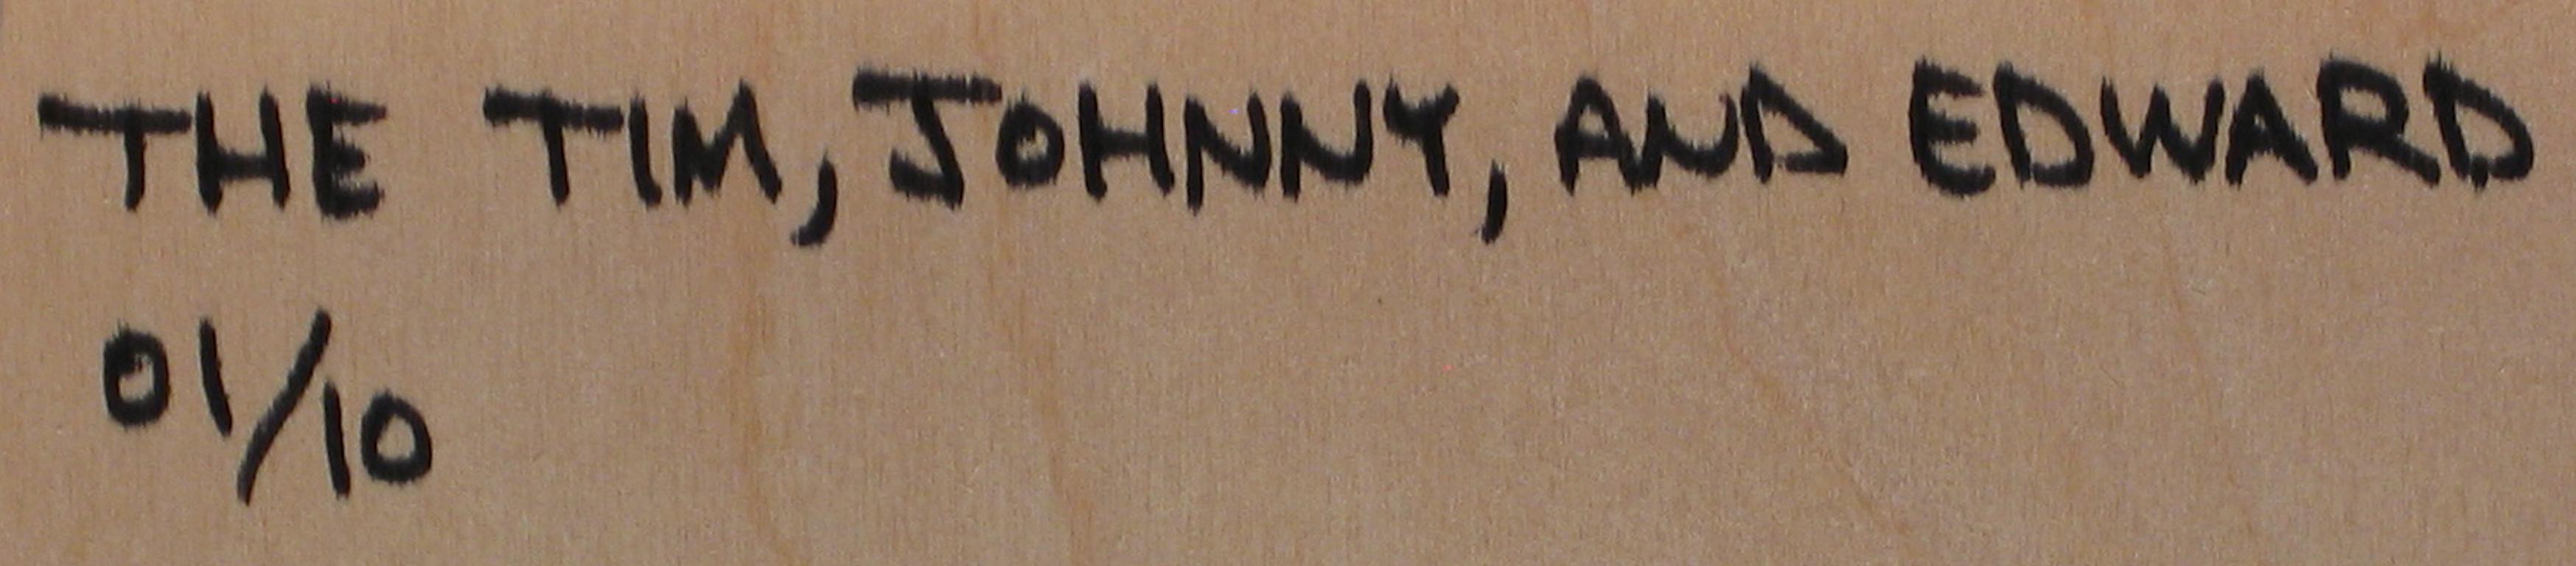 Tim + Johnny = Edward (Johnny Depp + Tim Burton) - Print by Troy Gua